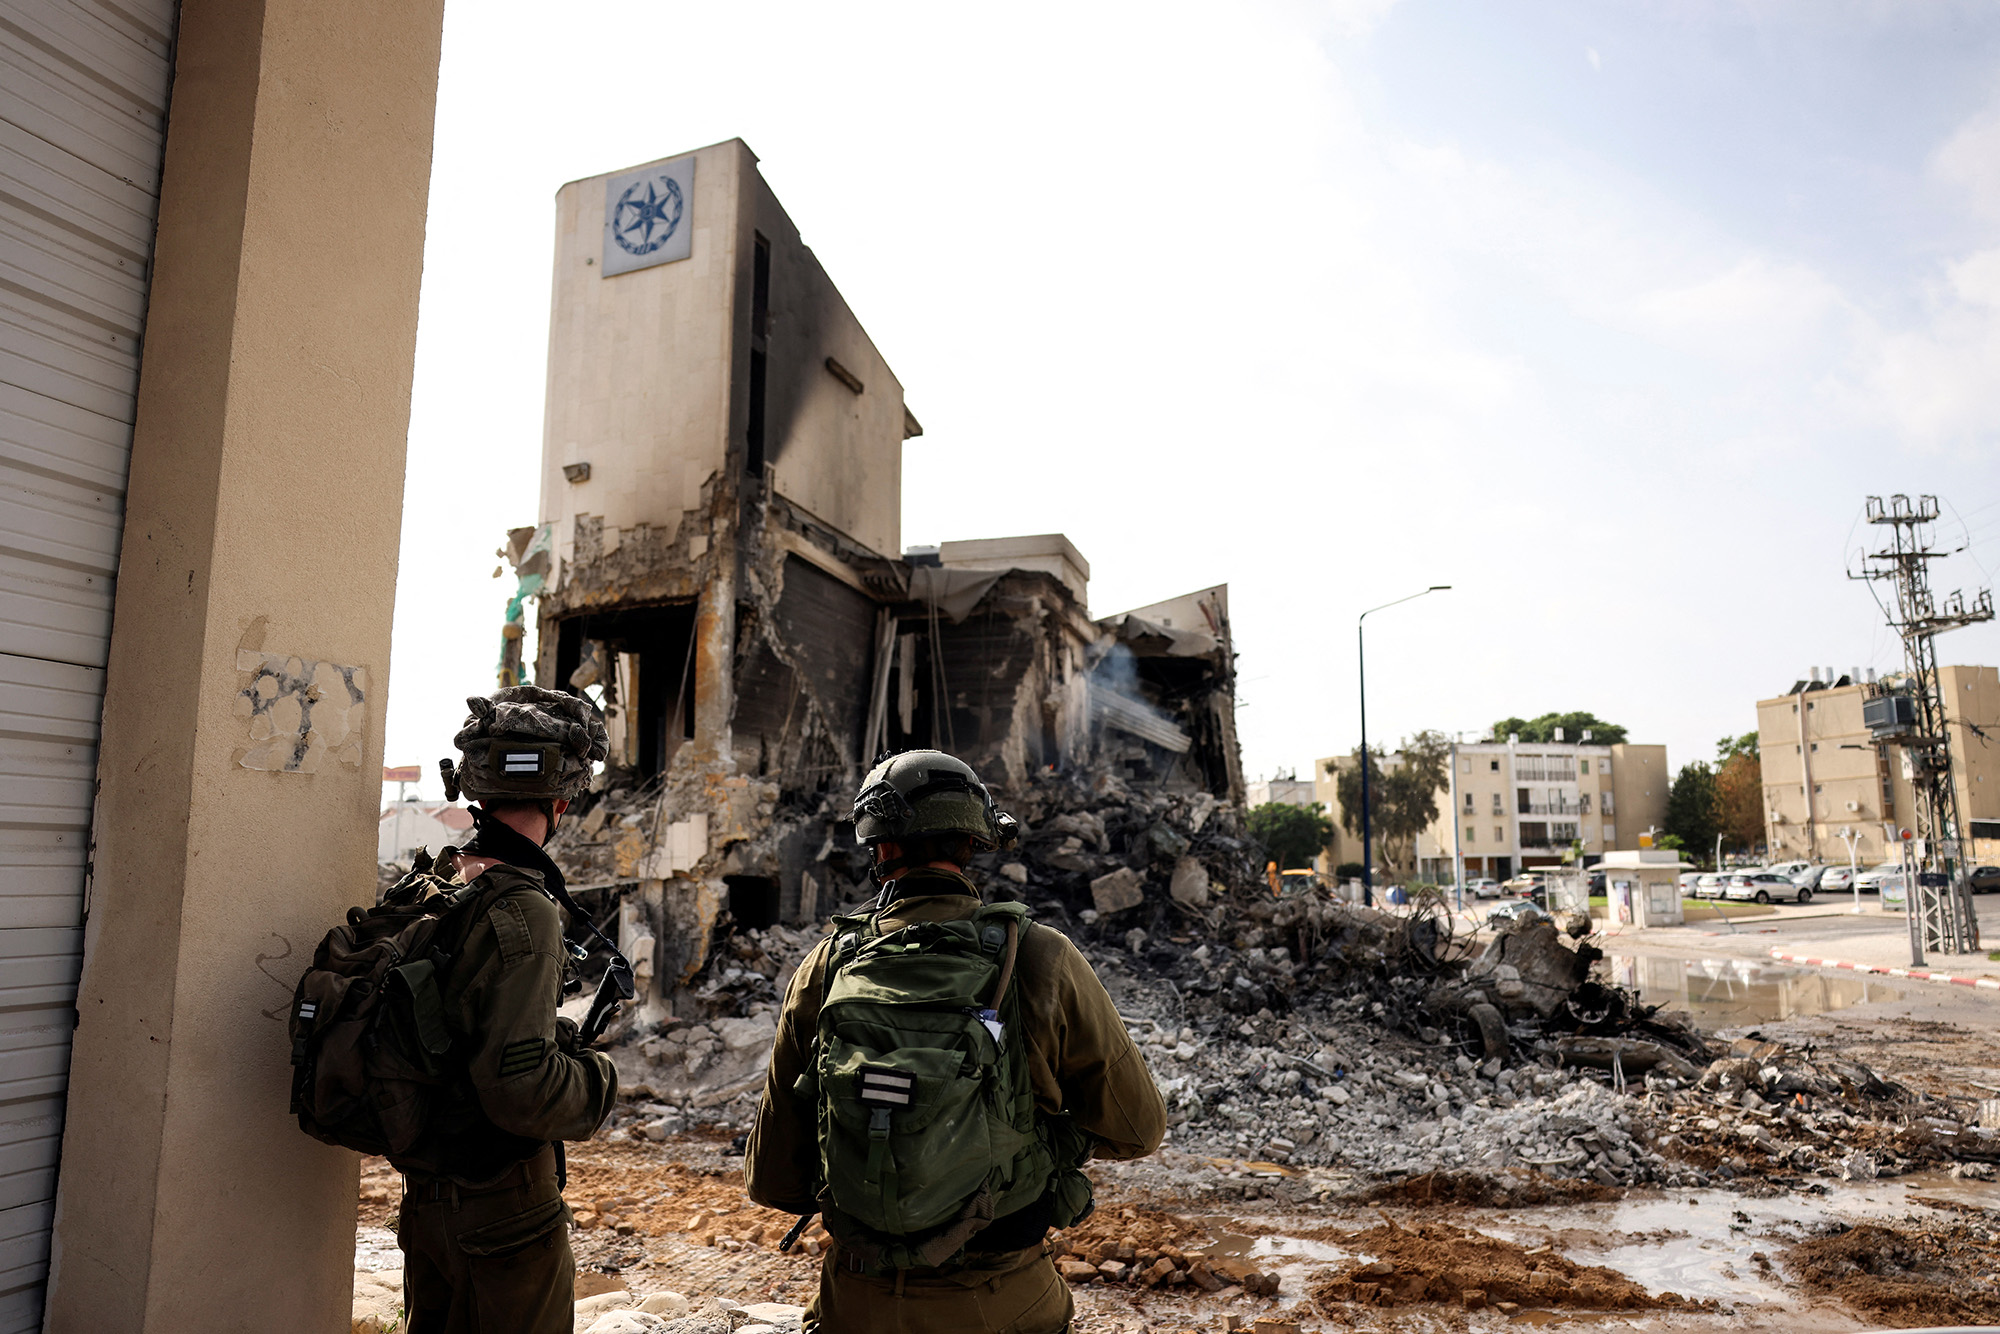 Latest news on the Israel-Hamas war